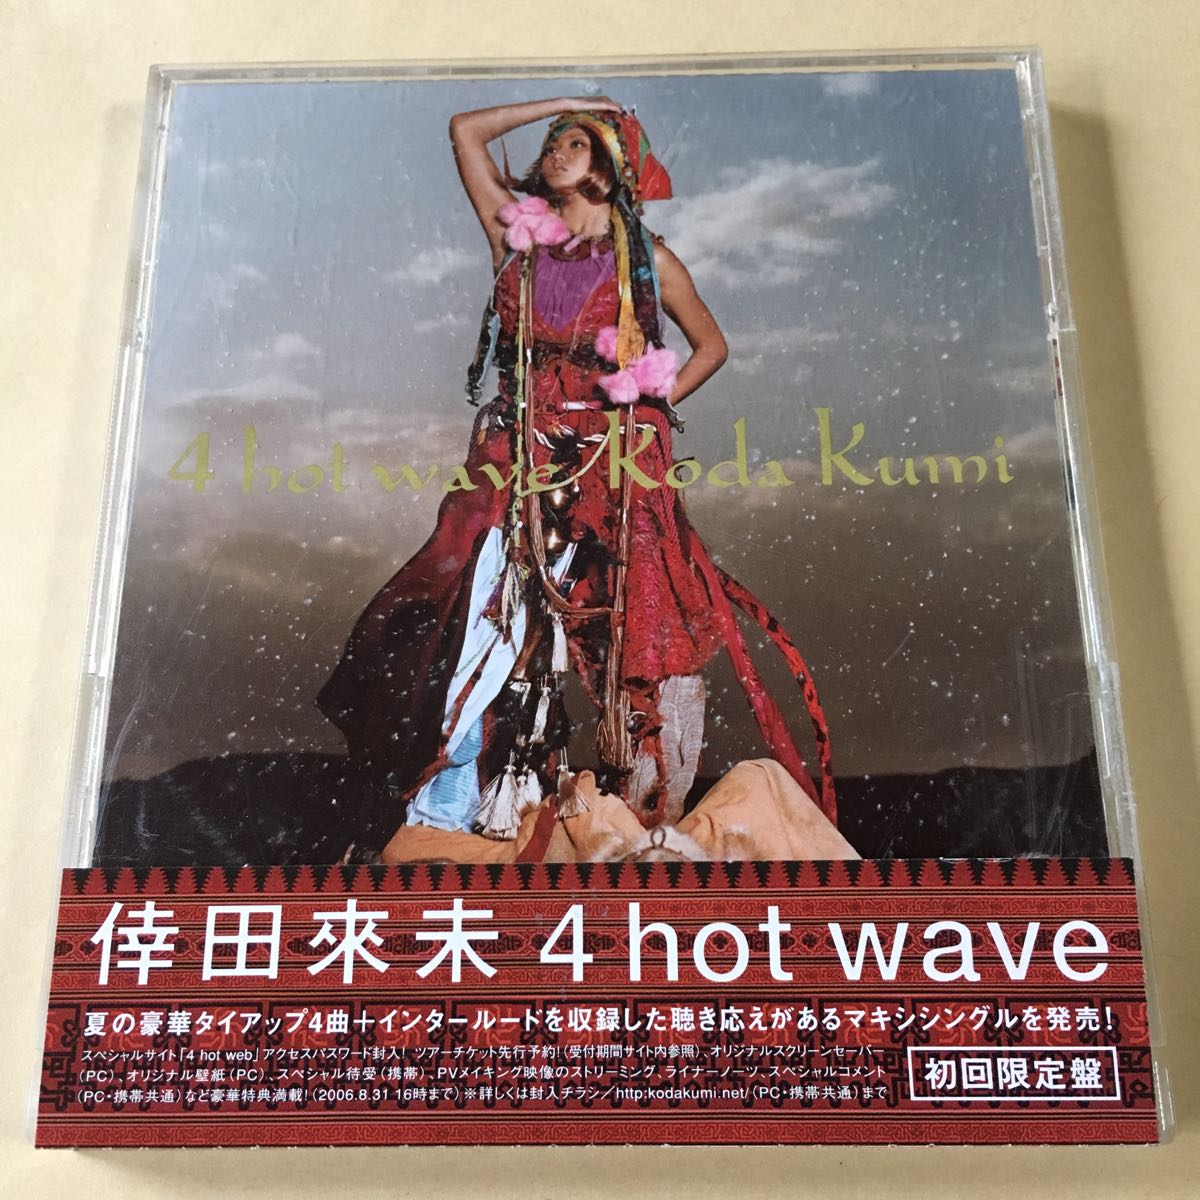 Koda Kumi 1cd 4 Hot Wave Real Yahoo Auction Salling